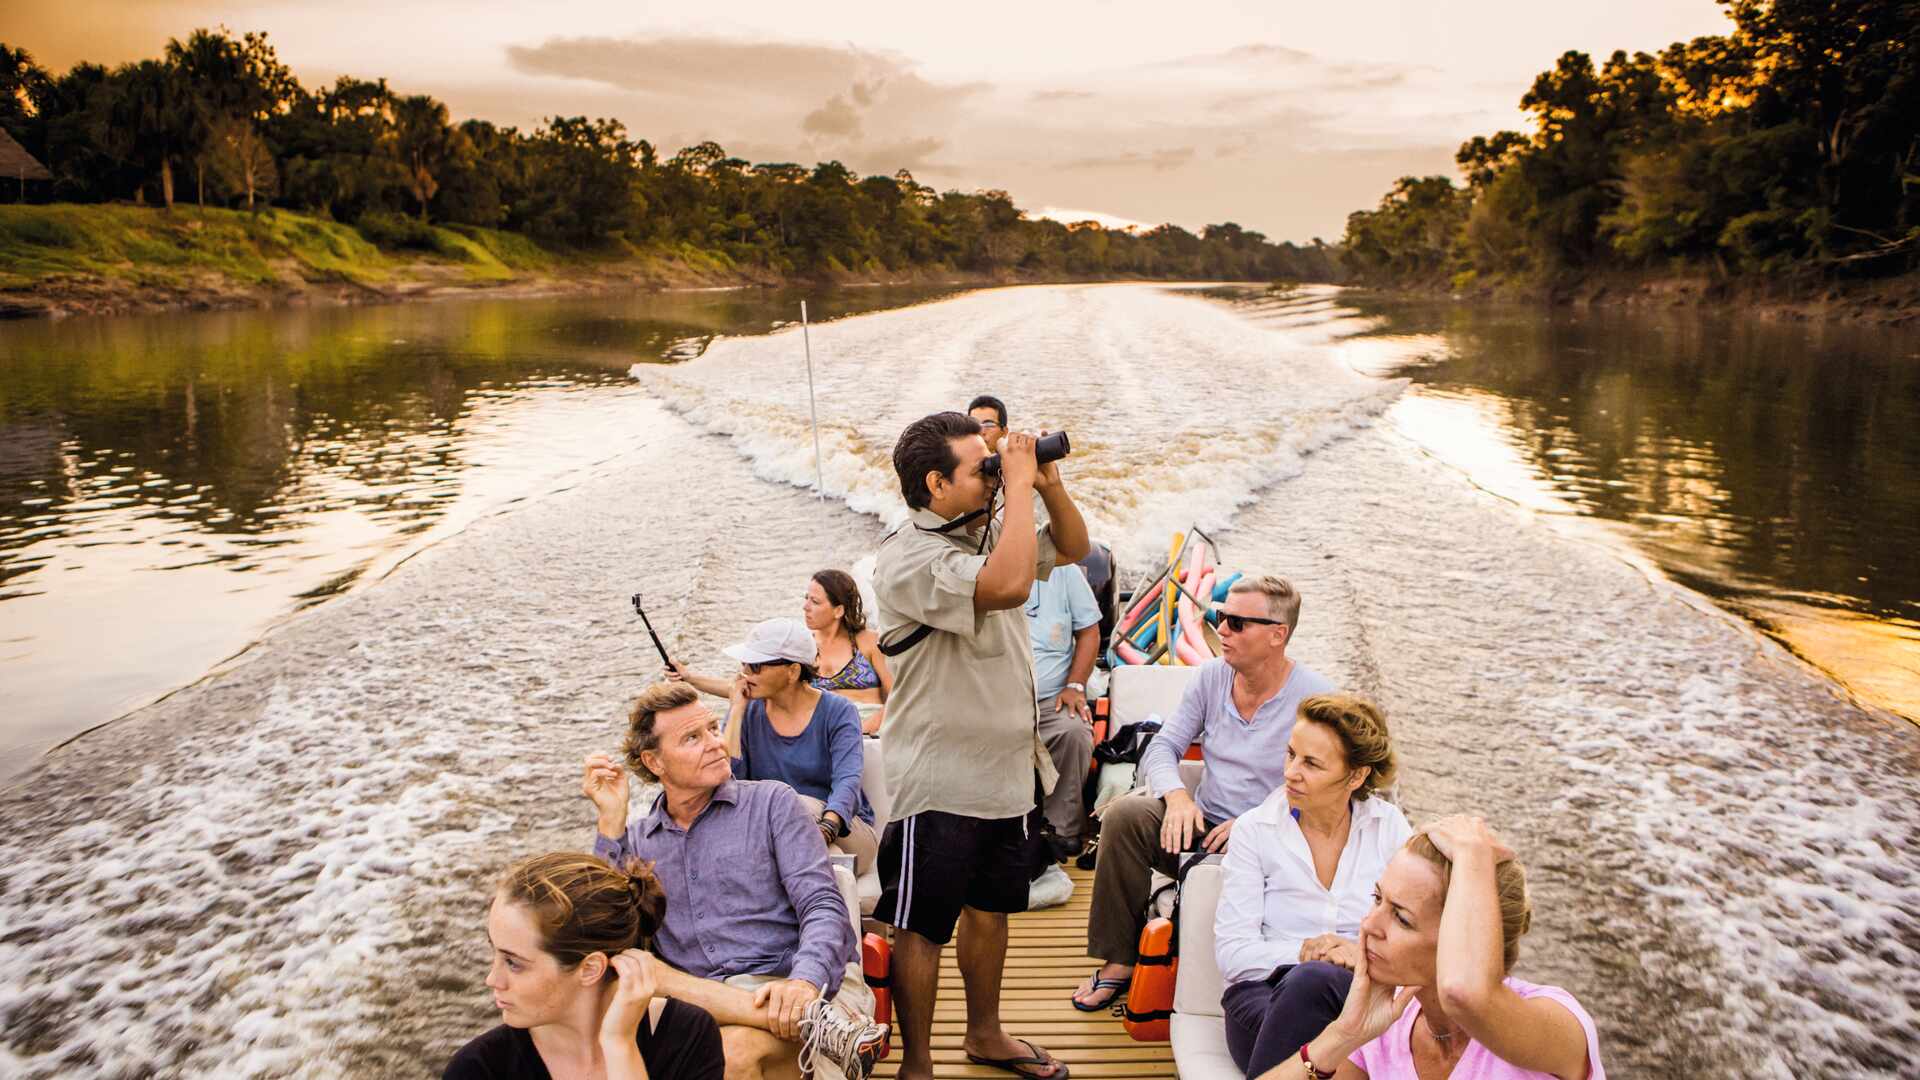 Passengers on an Amazon River Cruise